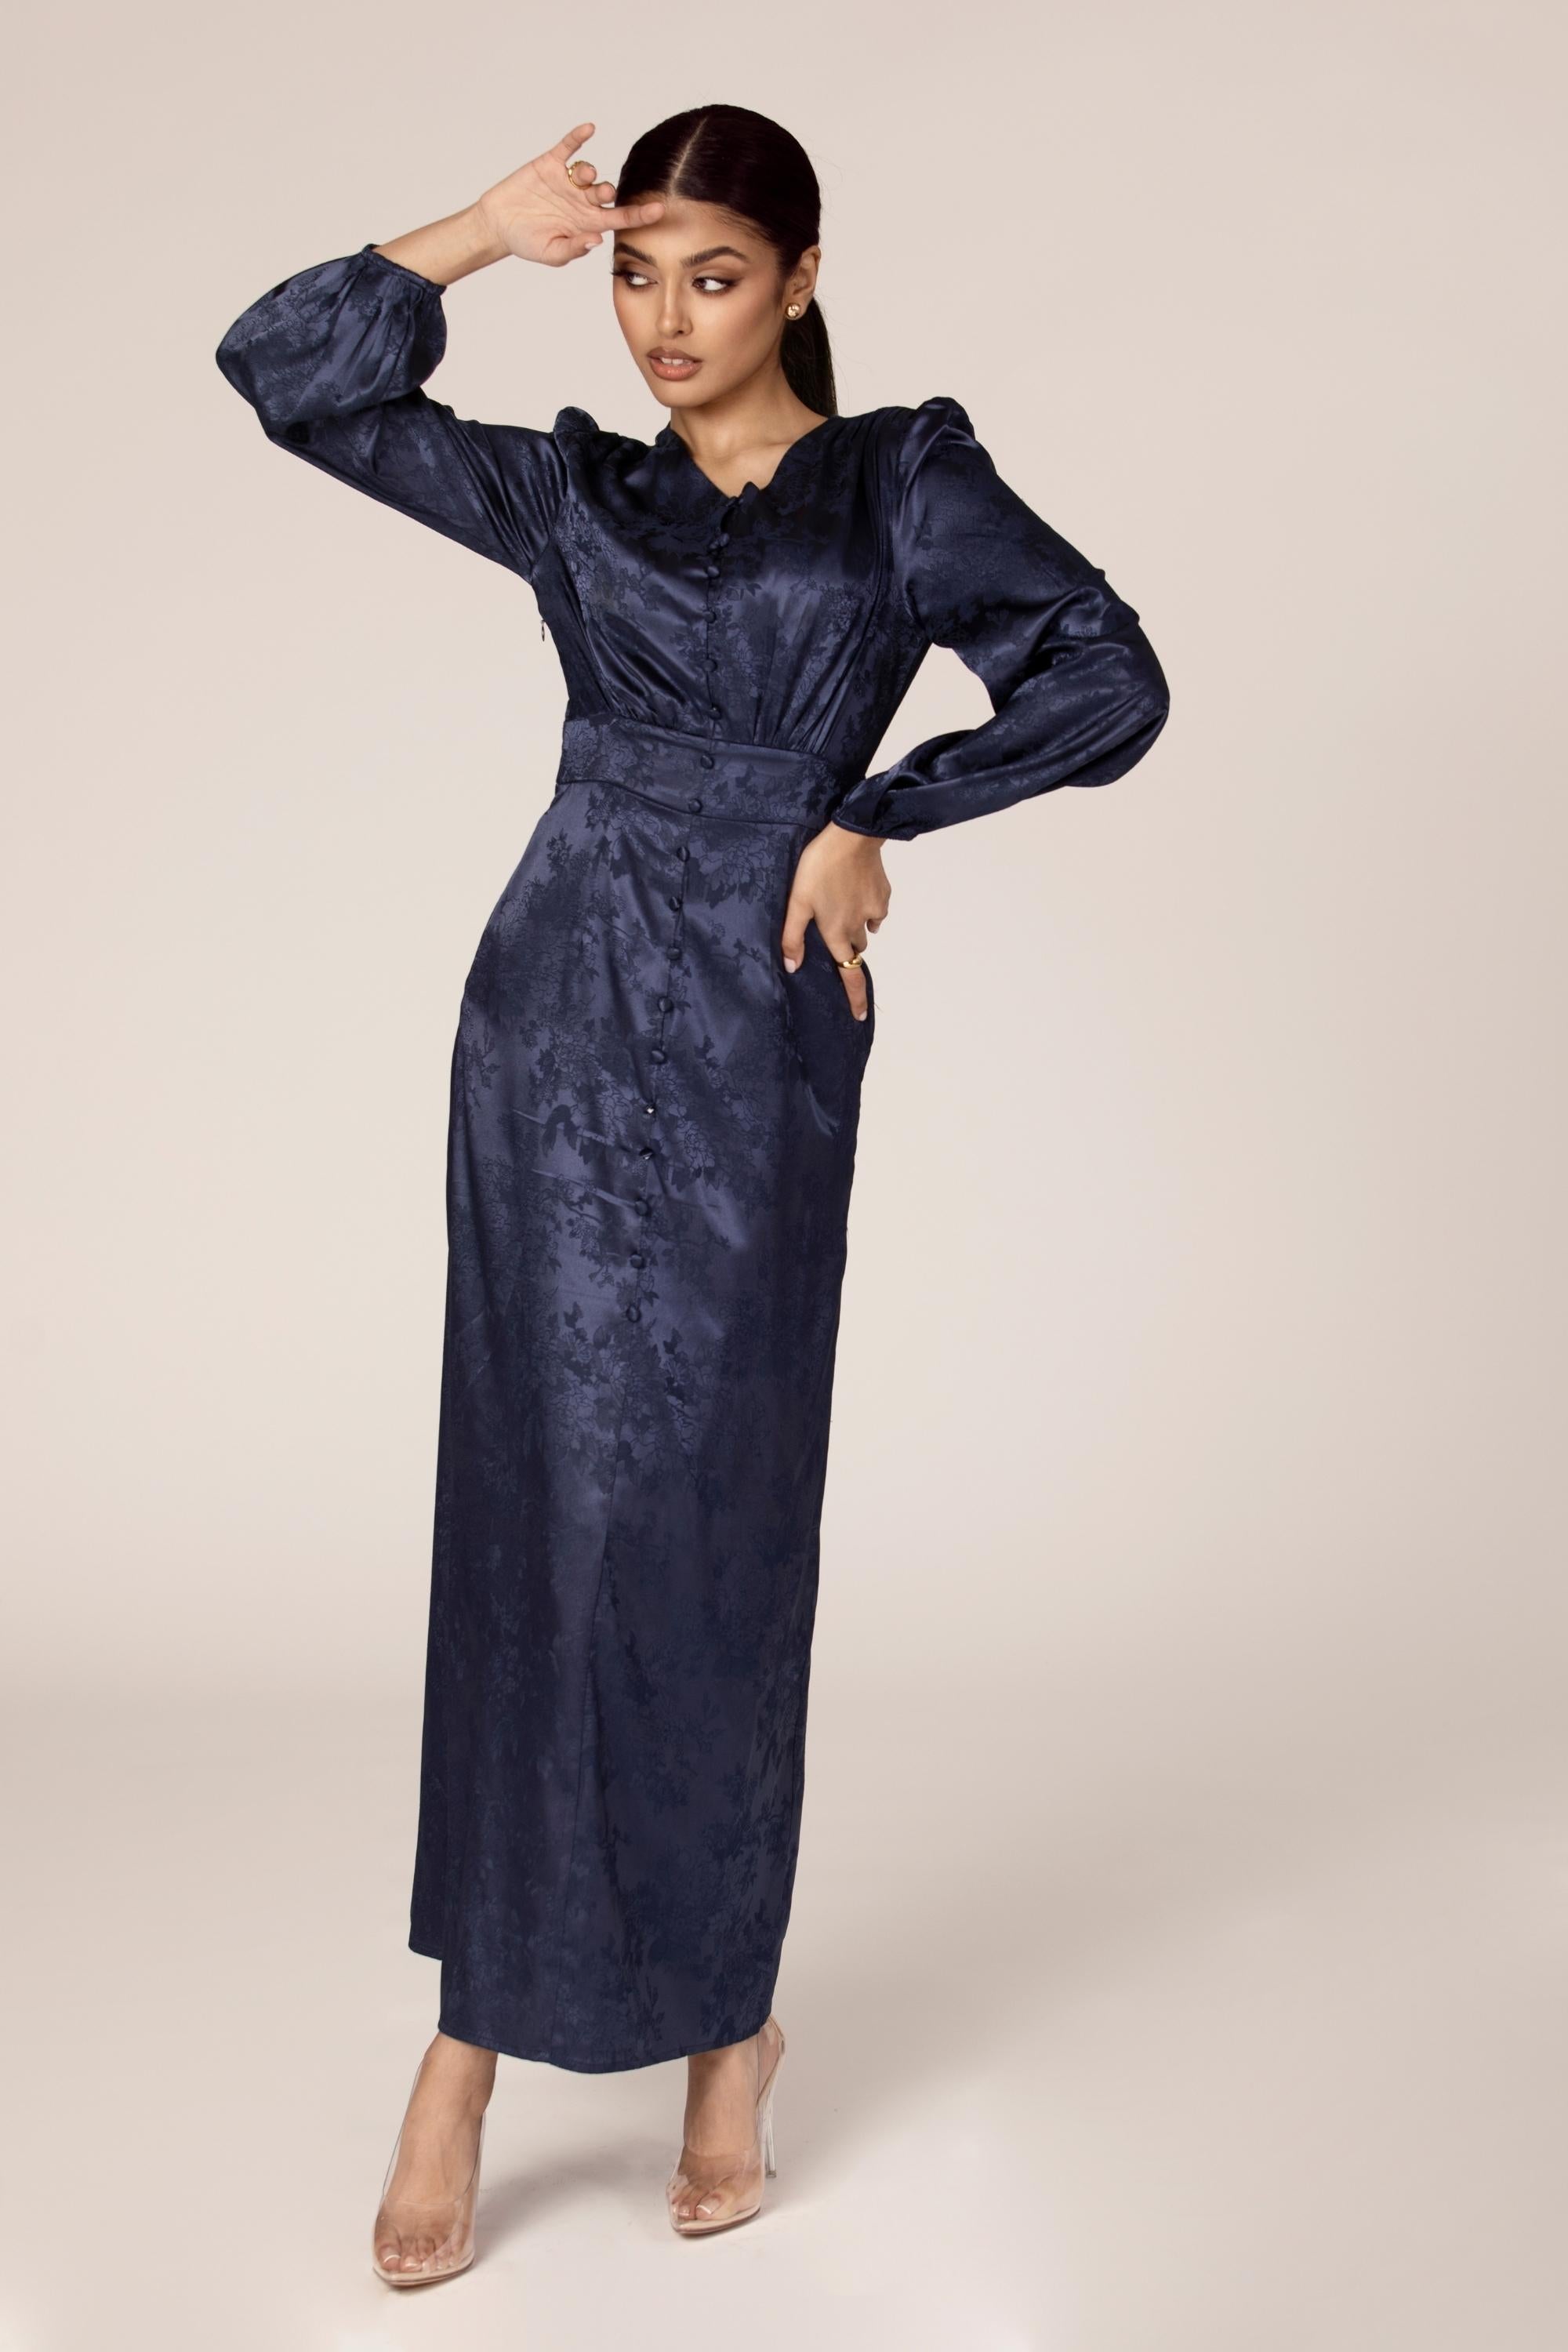 Ava Satin Maxi Dress - Navy Blue Dresses Veiled Collection 